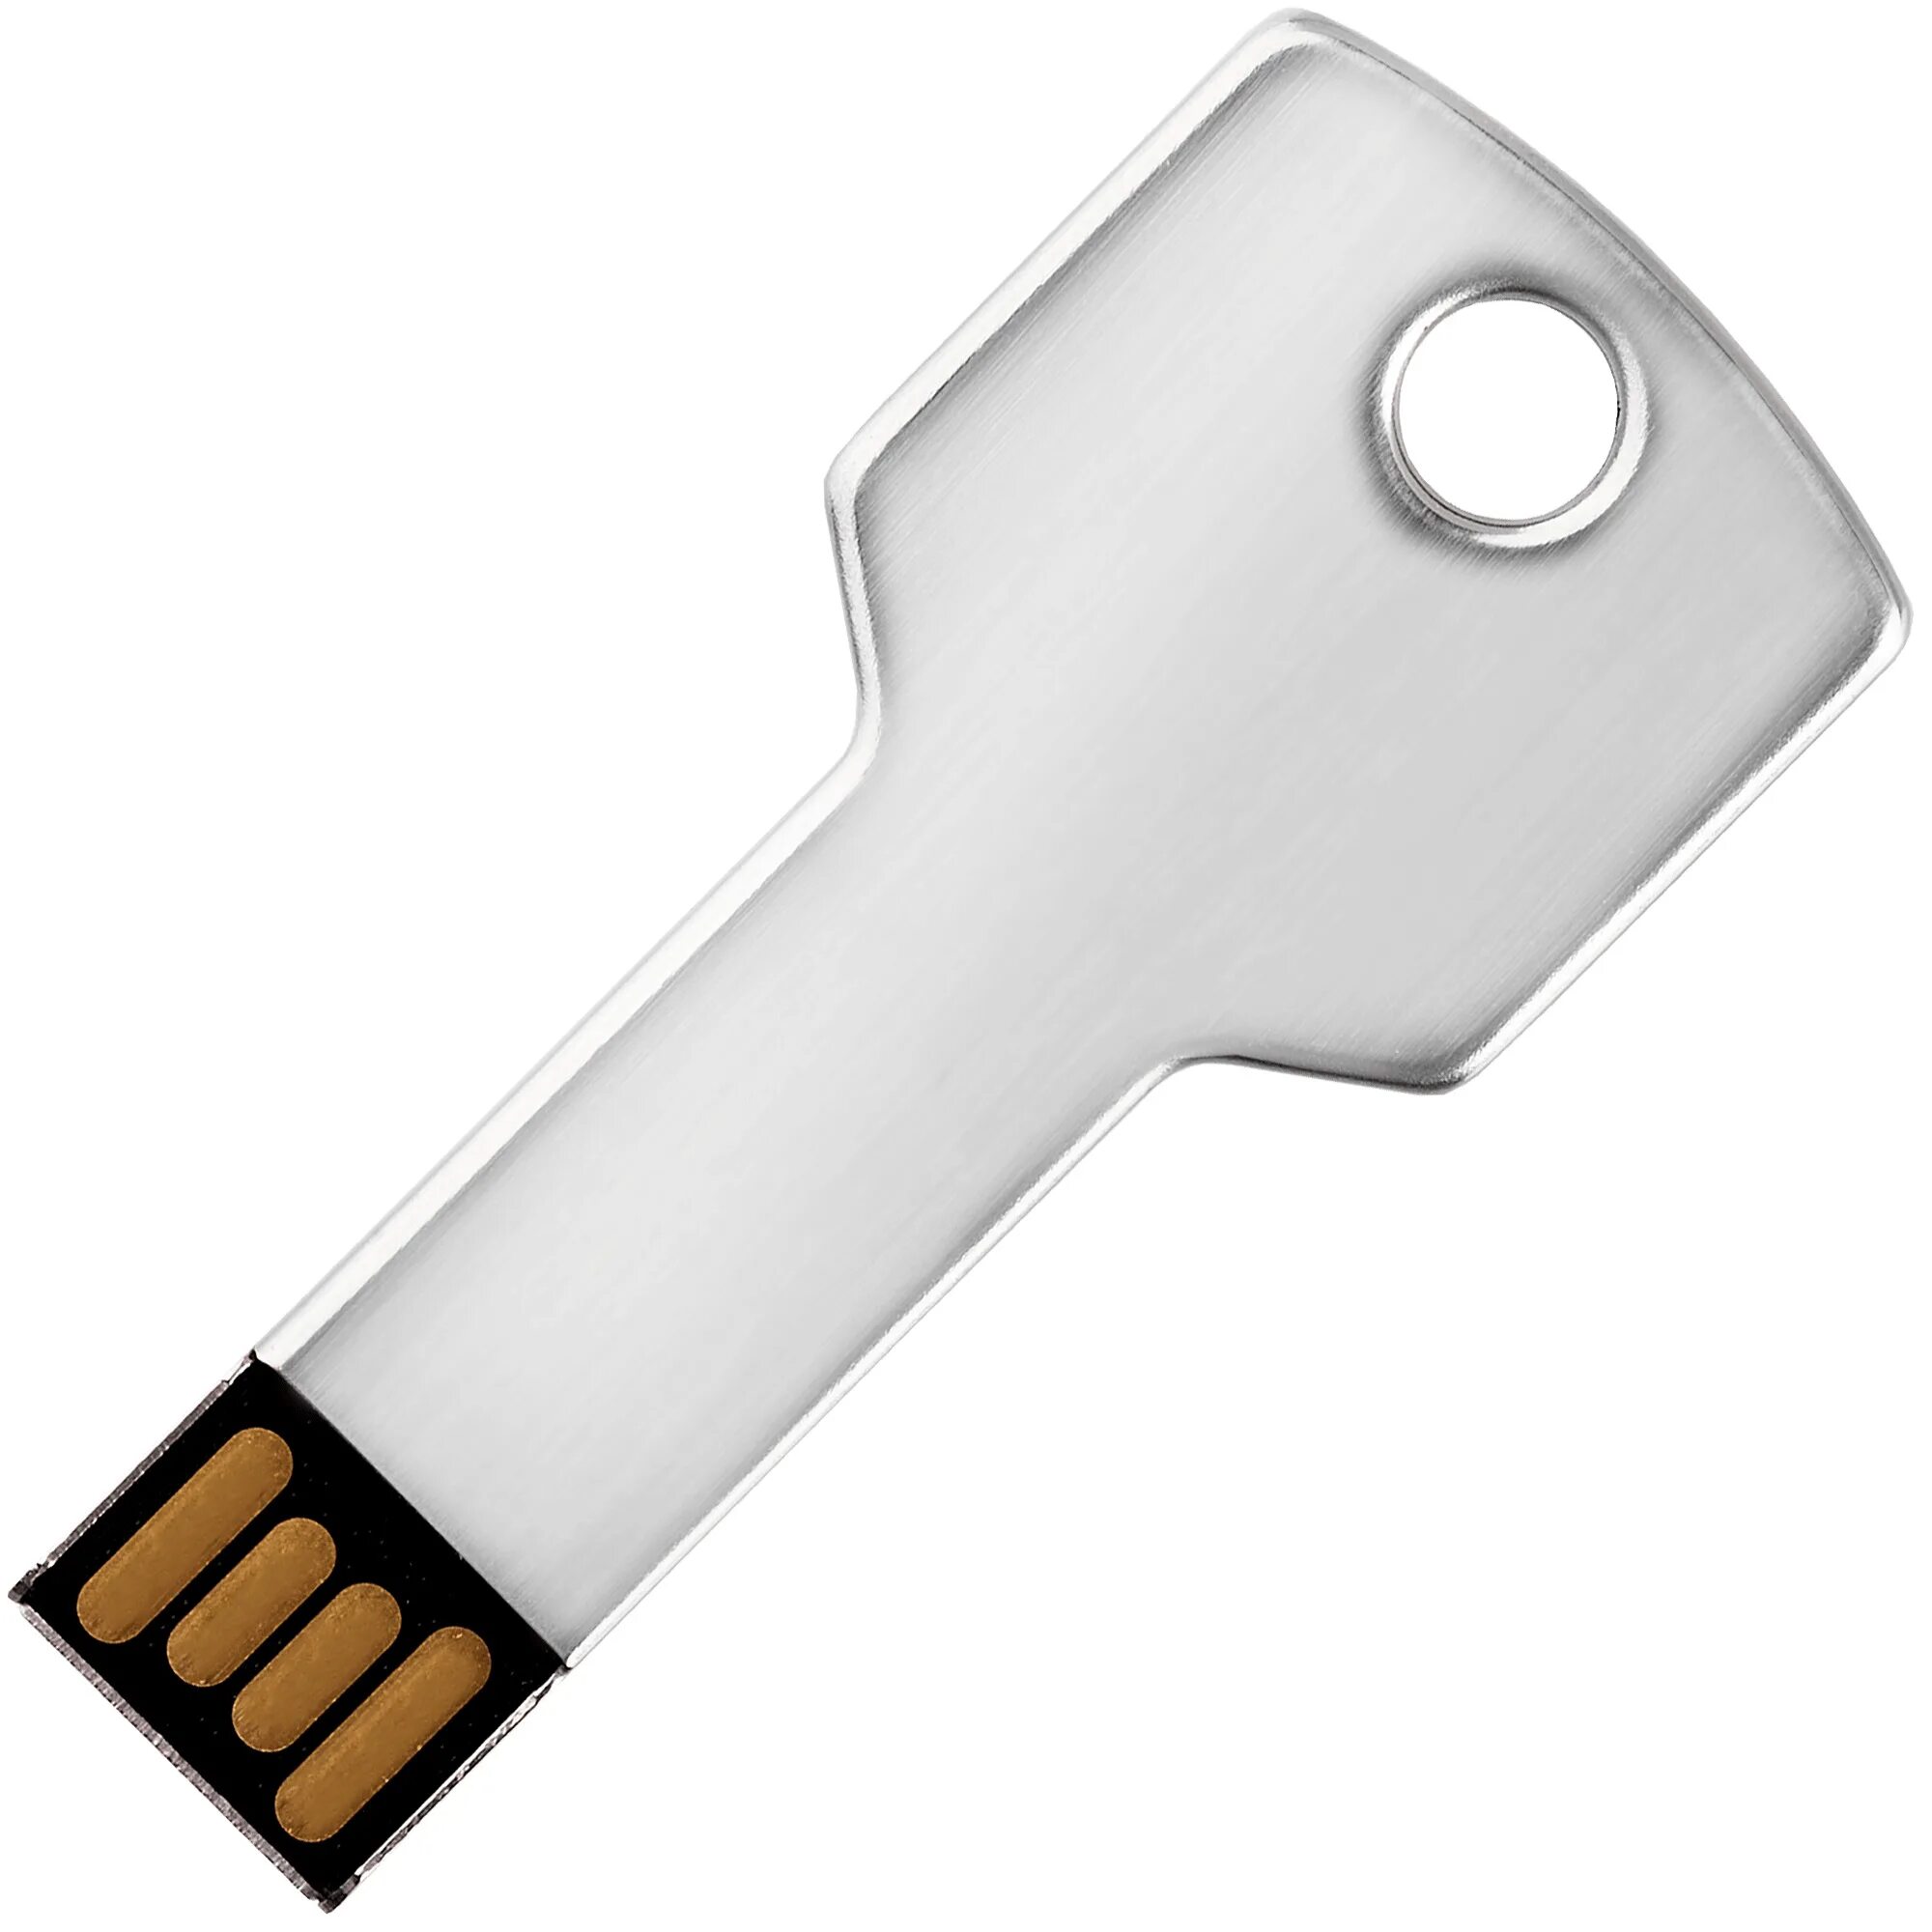 Флешка sined, серебристая 8гб. Kingston флешка на ключи. Noname флешка «ключ», 16 ГБ. Флешка «ключ», 8 ГБ. Flash ключ